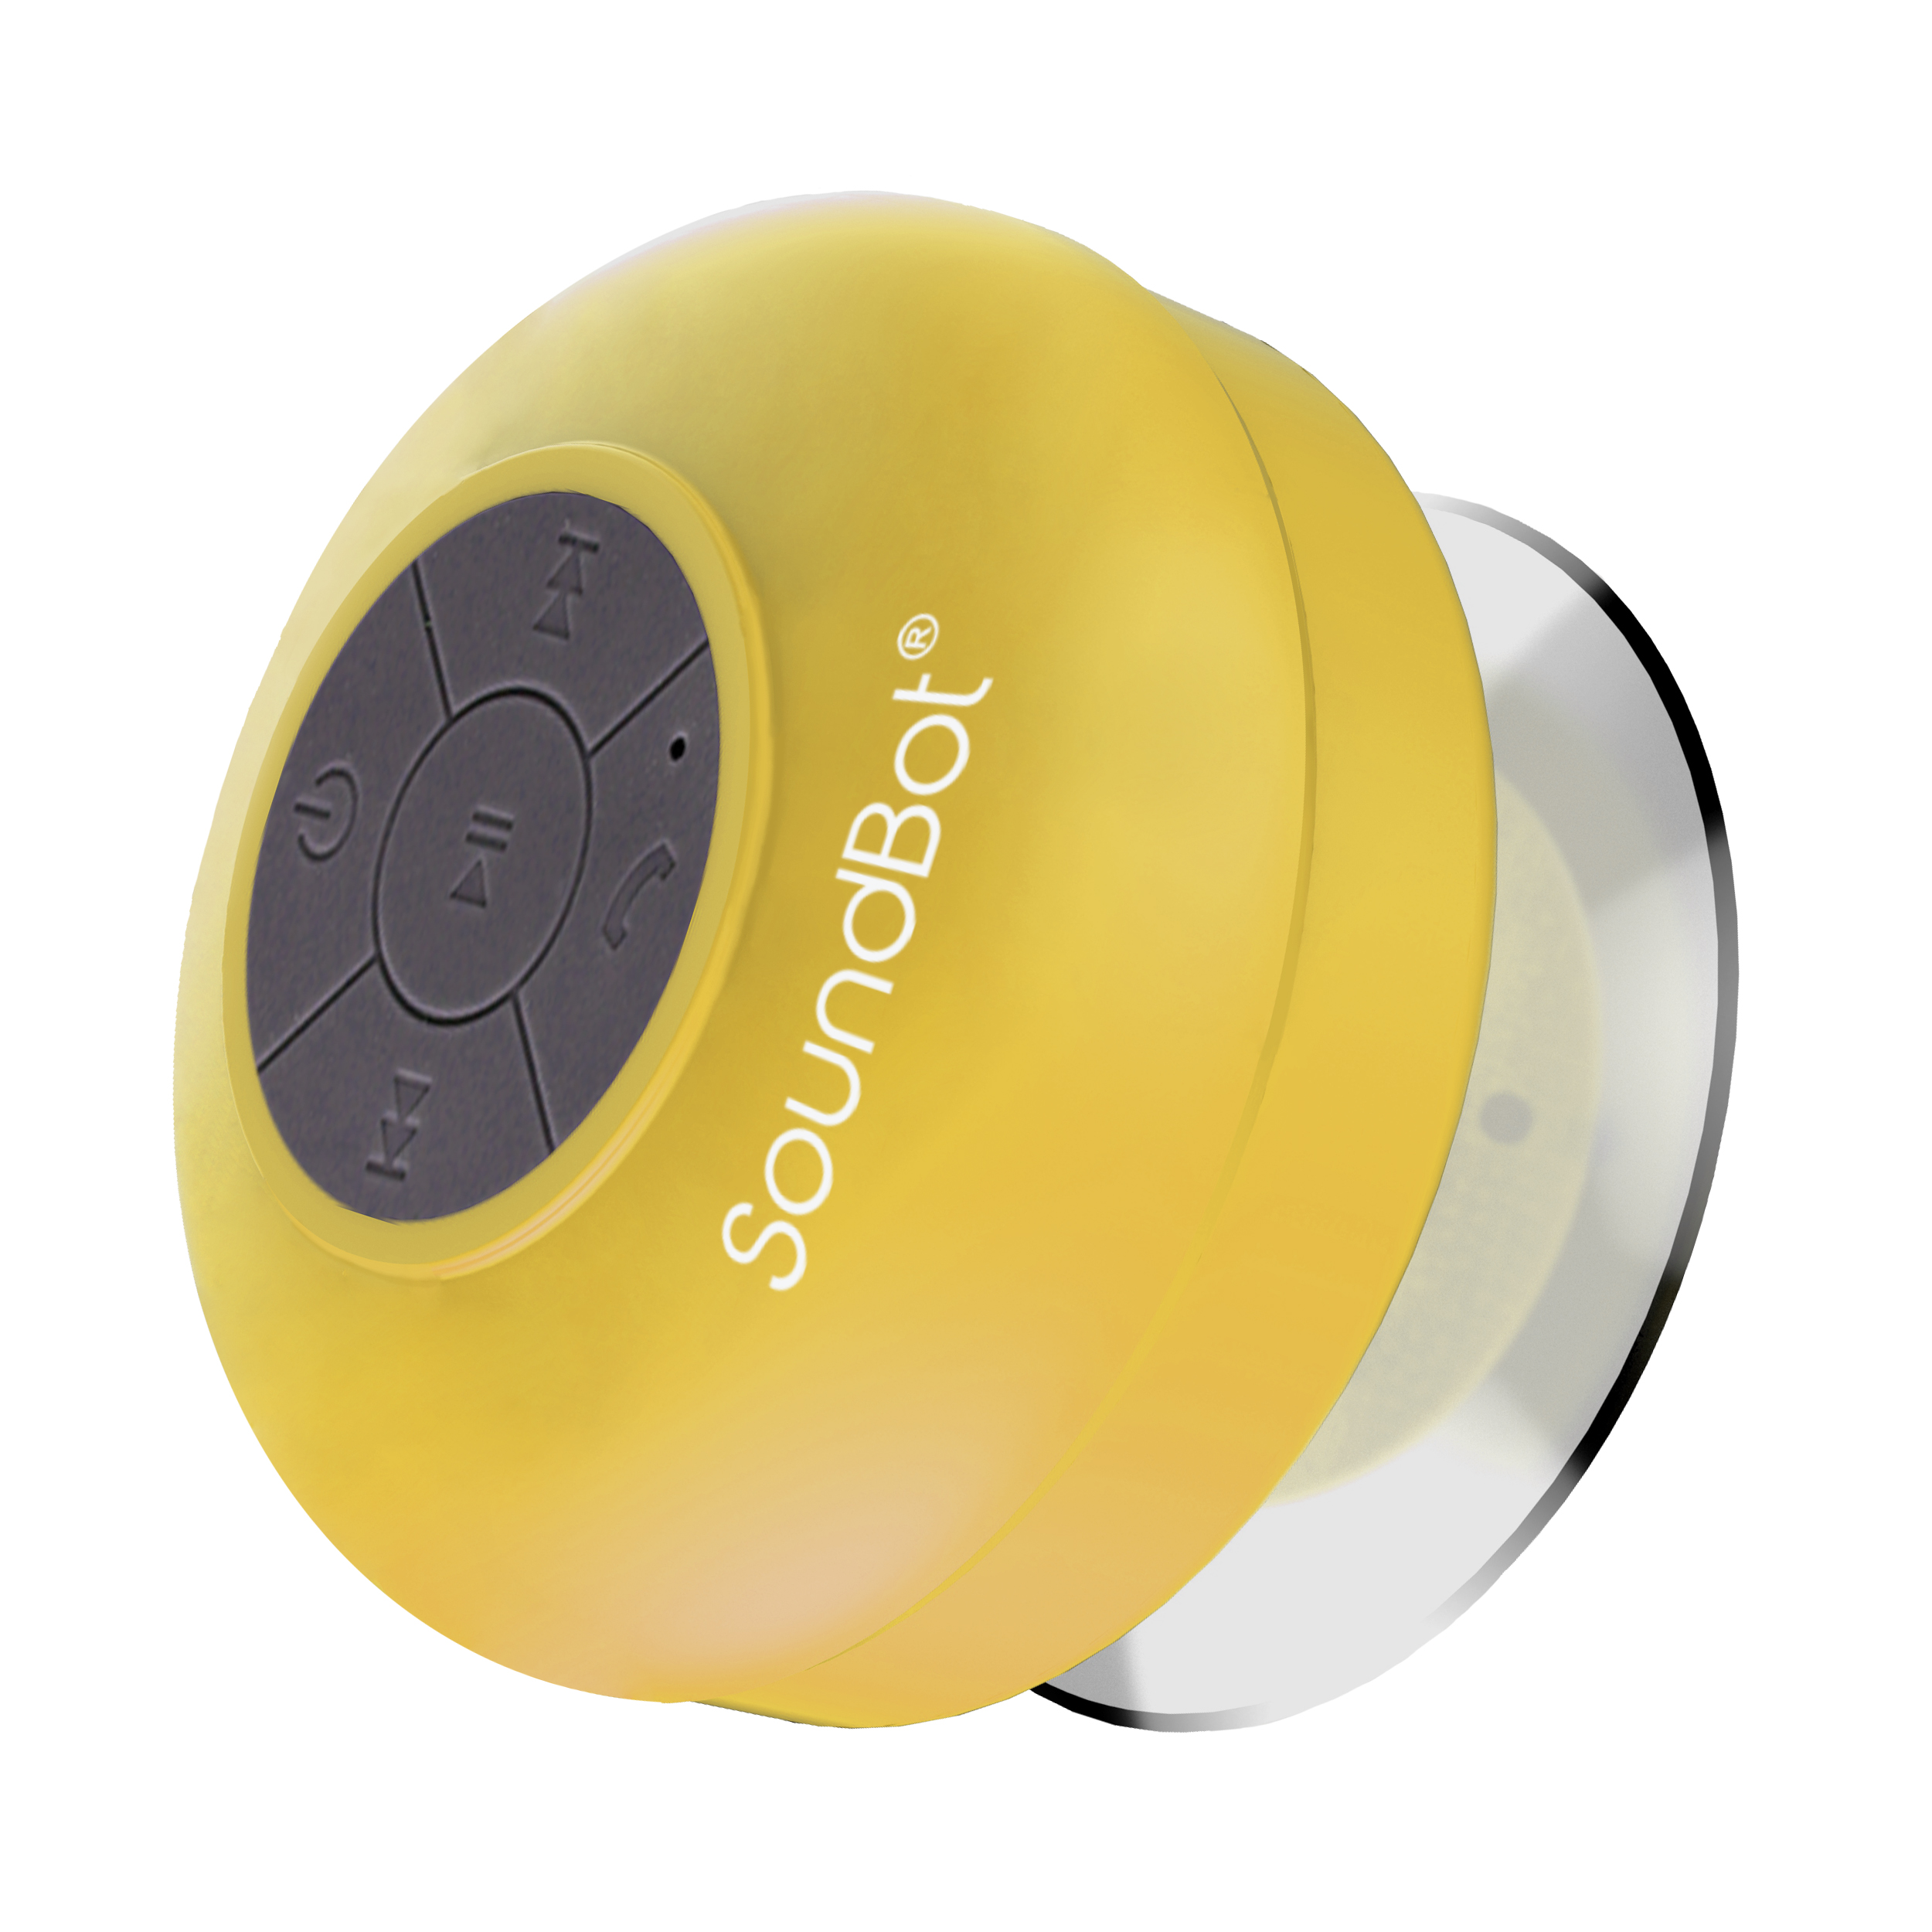 SoundBot 1.59 oz Portable Bluetooth Speaker, Yellow, SB510 - image 4 of 8